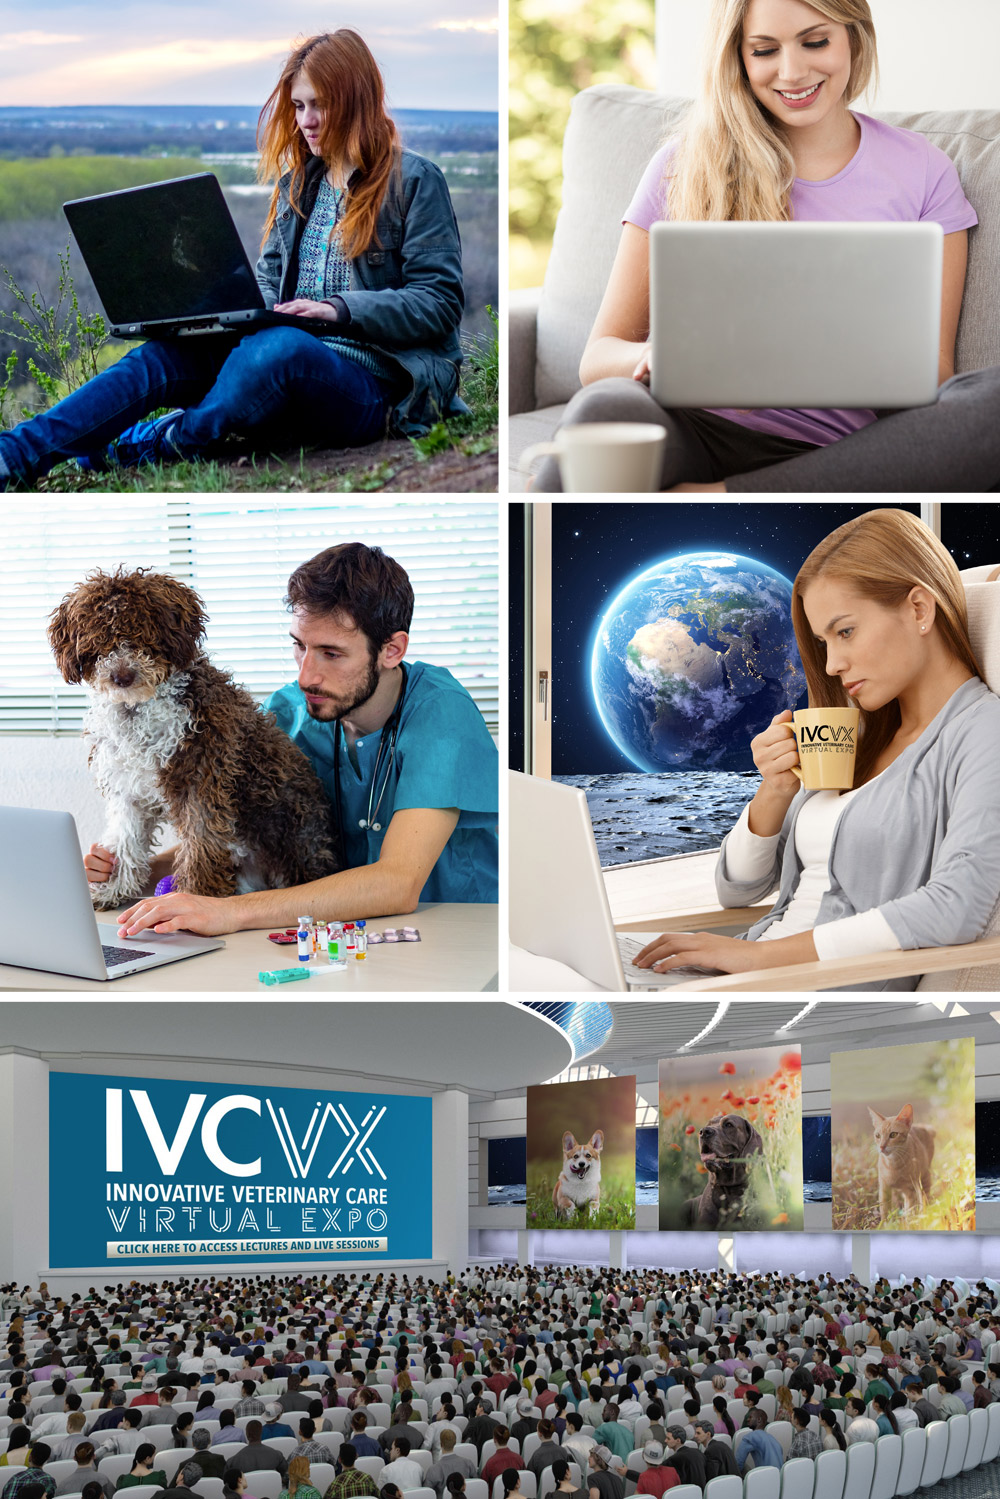 Home IVCVX Virtual Veterinary Conference & Trade Show